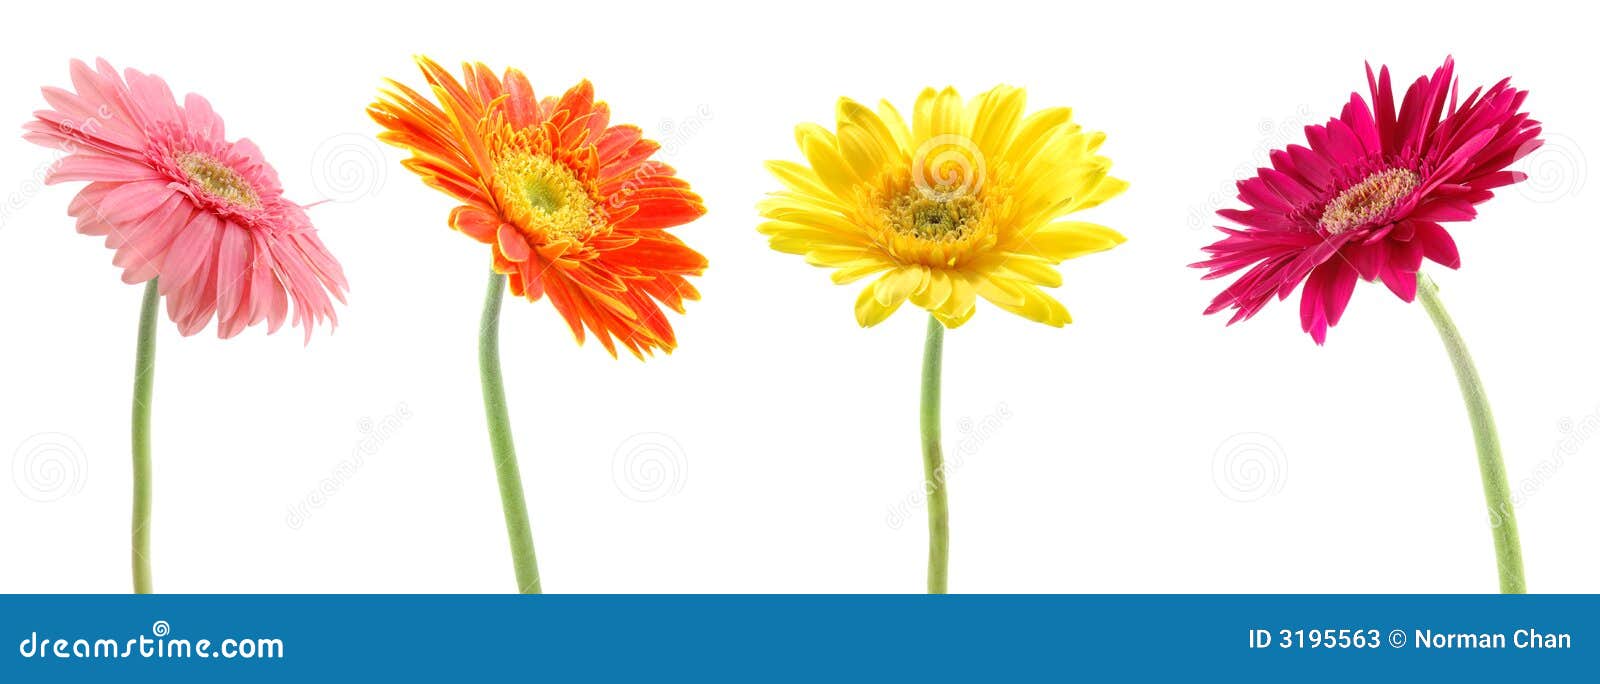 Colorful gerberas stock image. Image of blossom, gerbera - 3195563